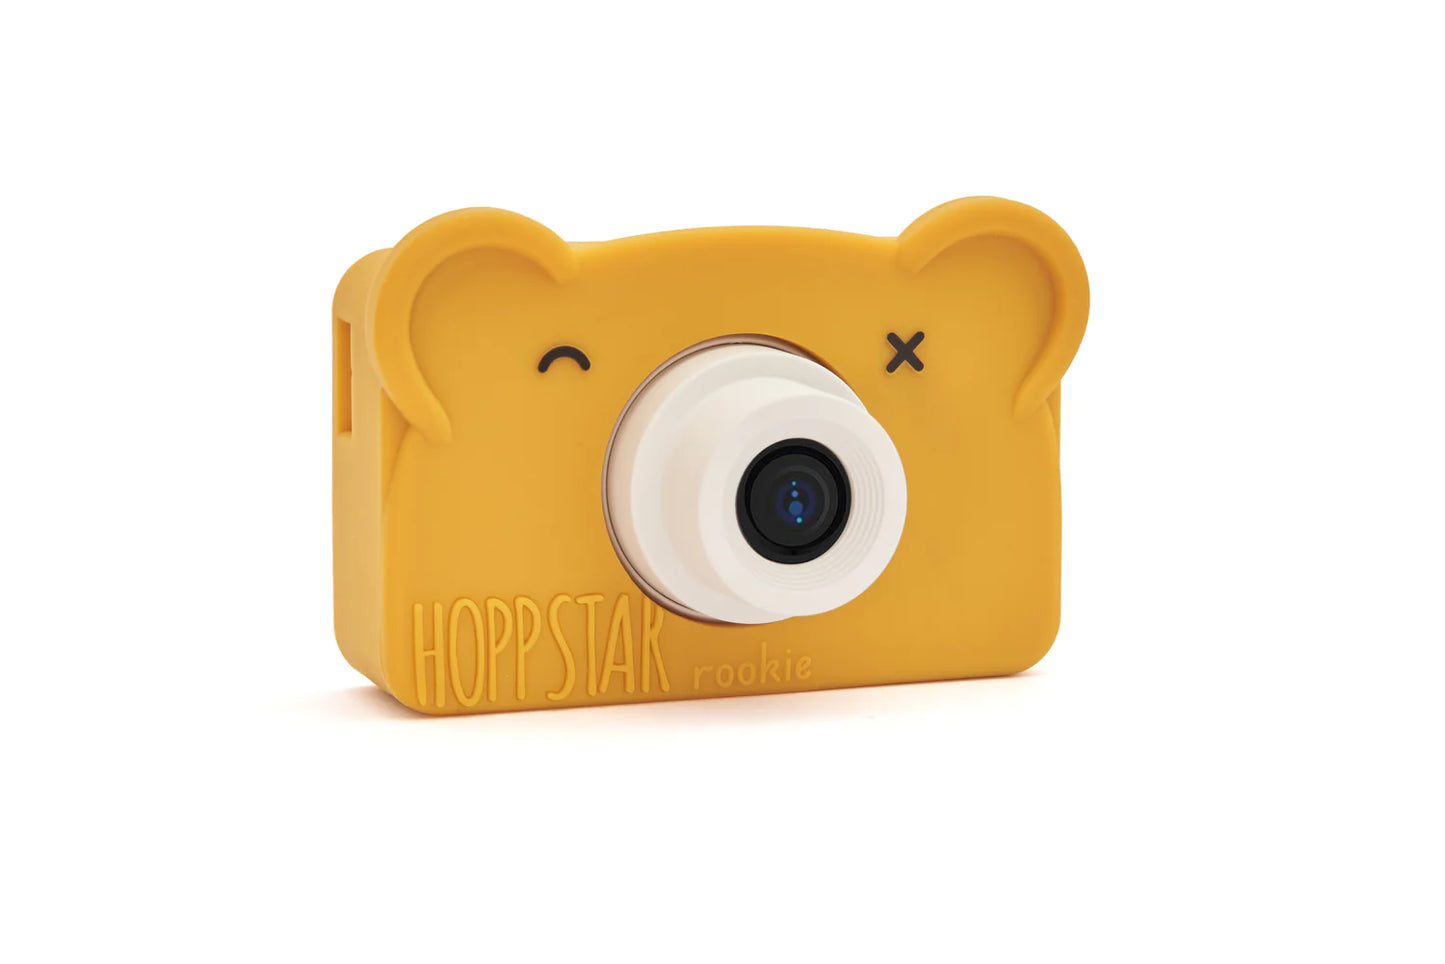 Cámara digital Rookie Honey - Hoppstar